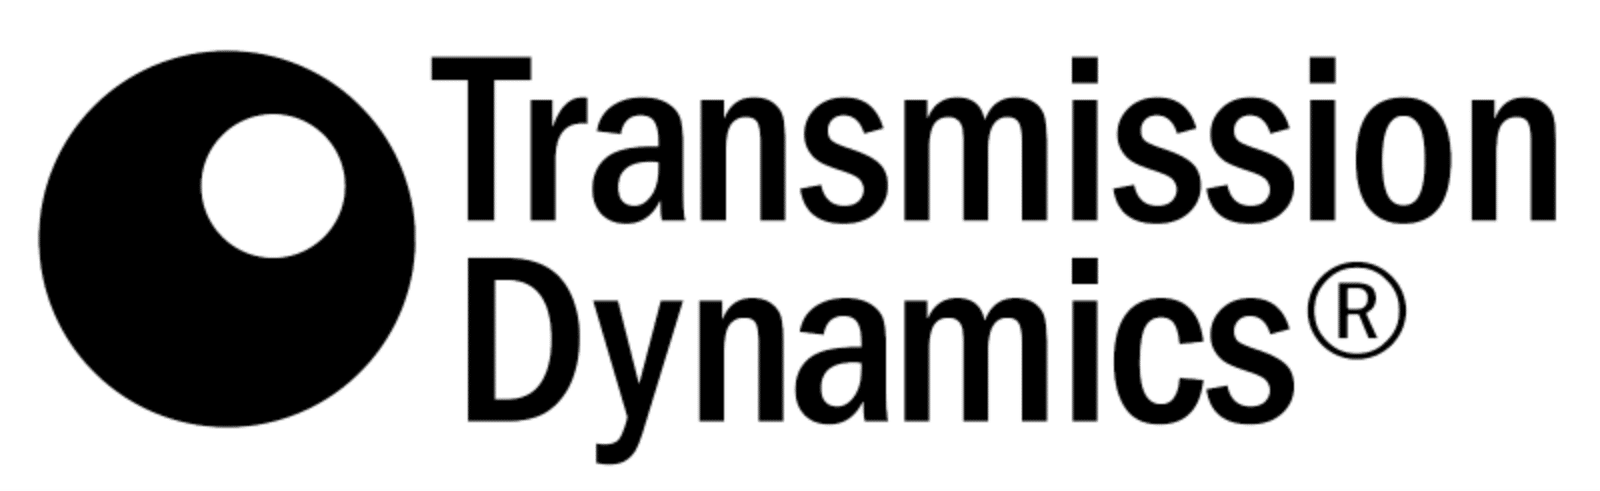 Transmission Dynamics Logo